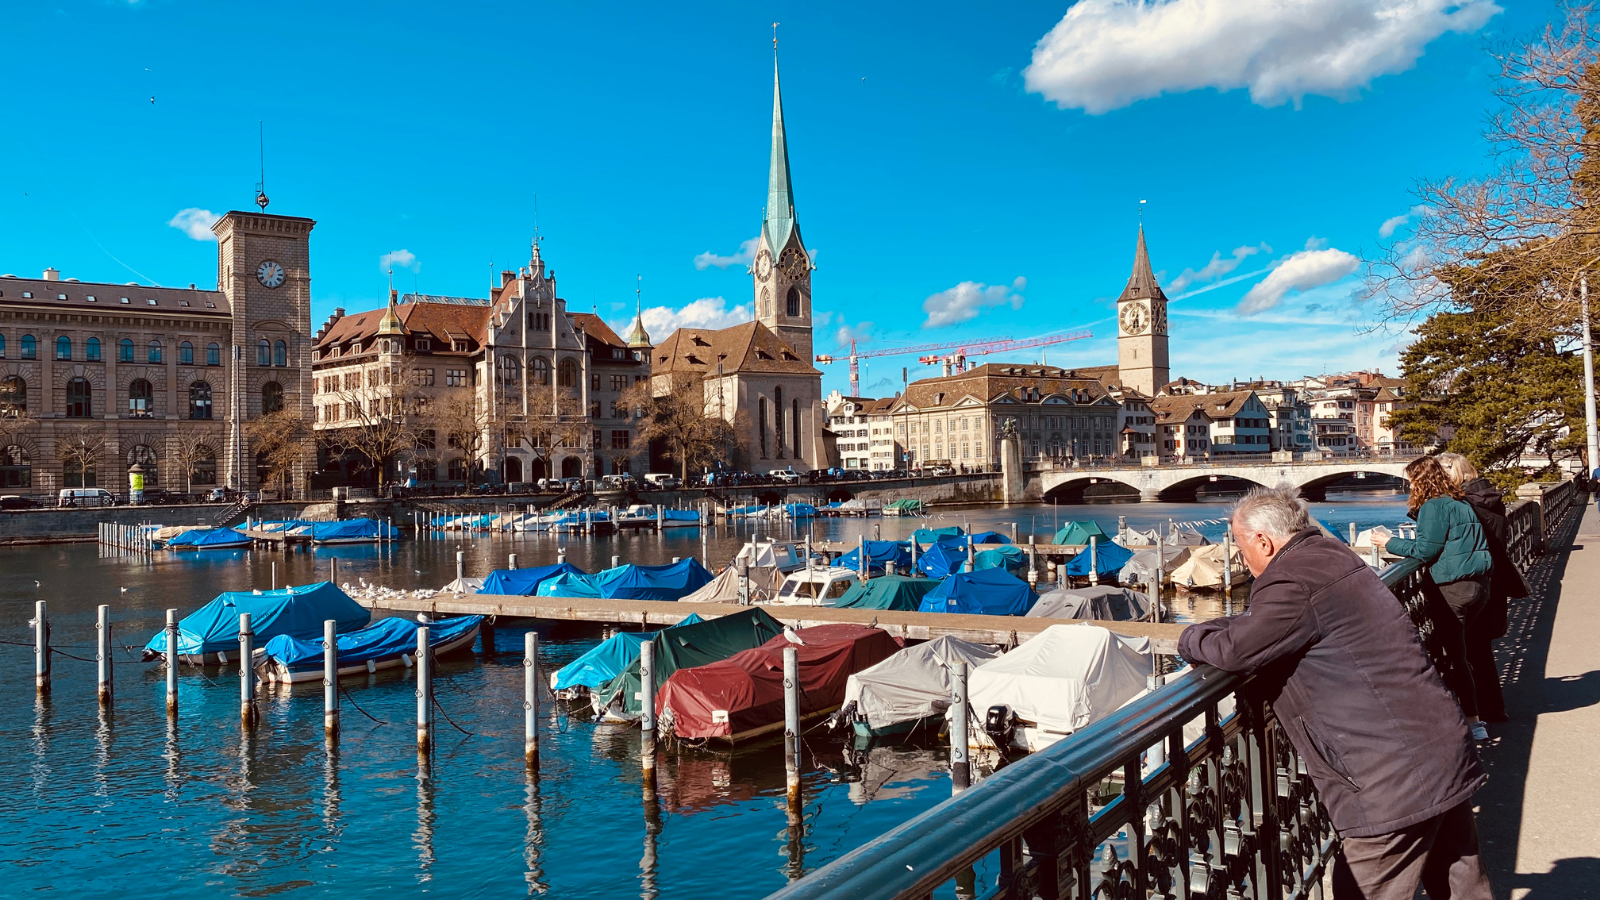 Zurich river in the sun, 2020 public health program